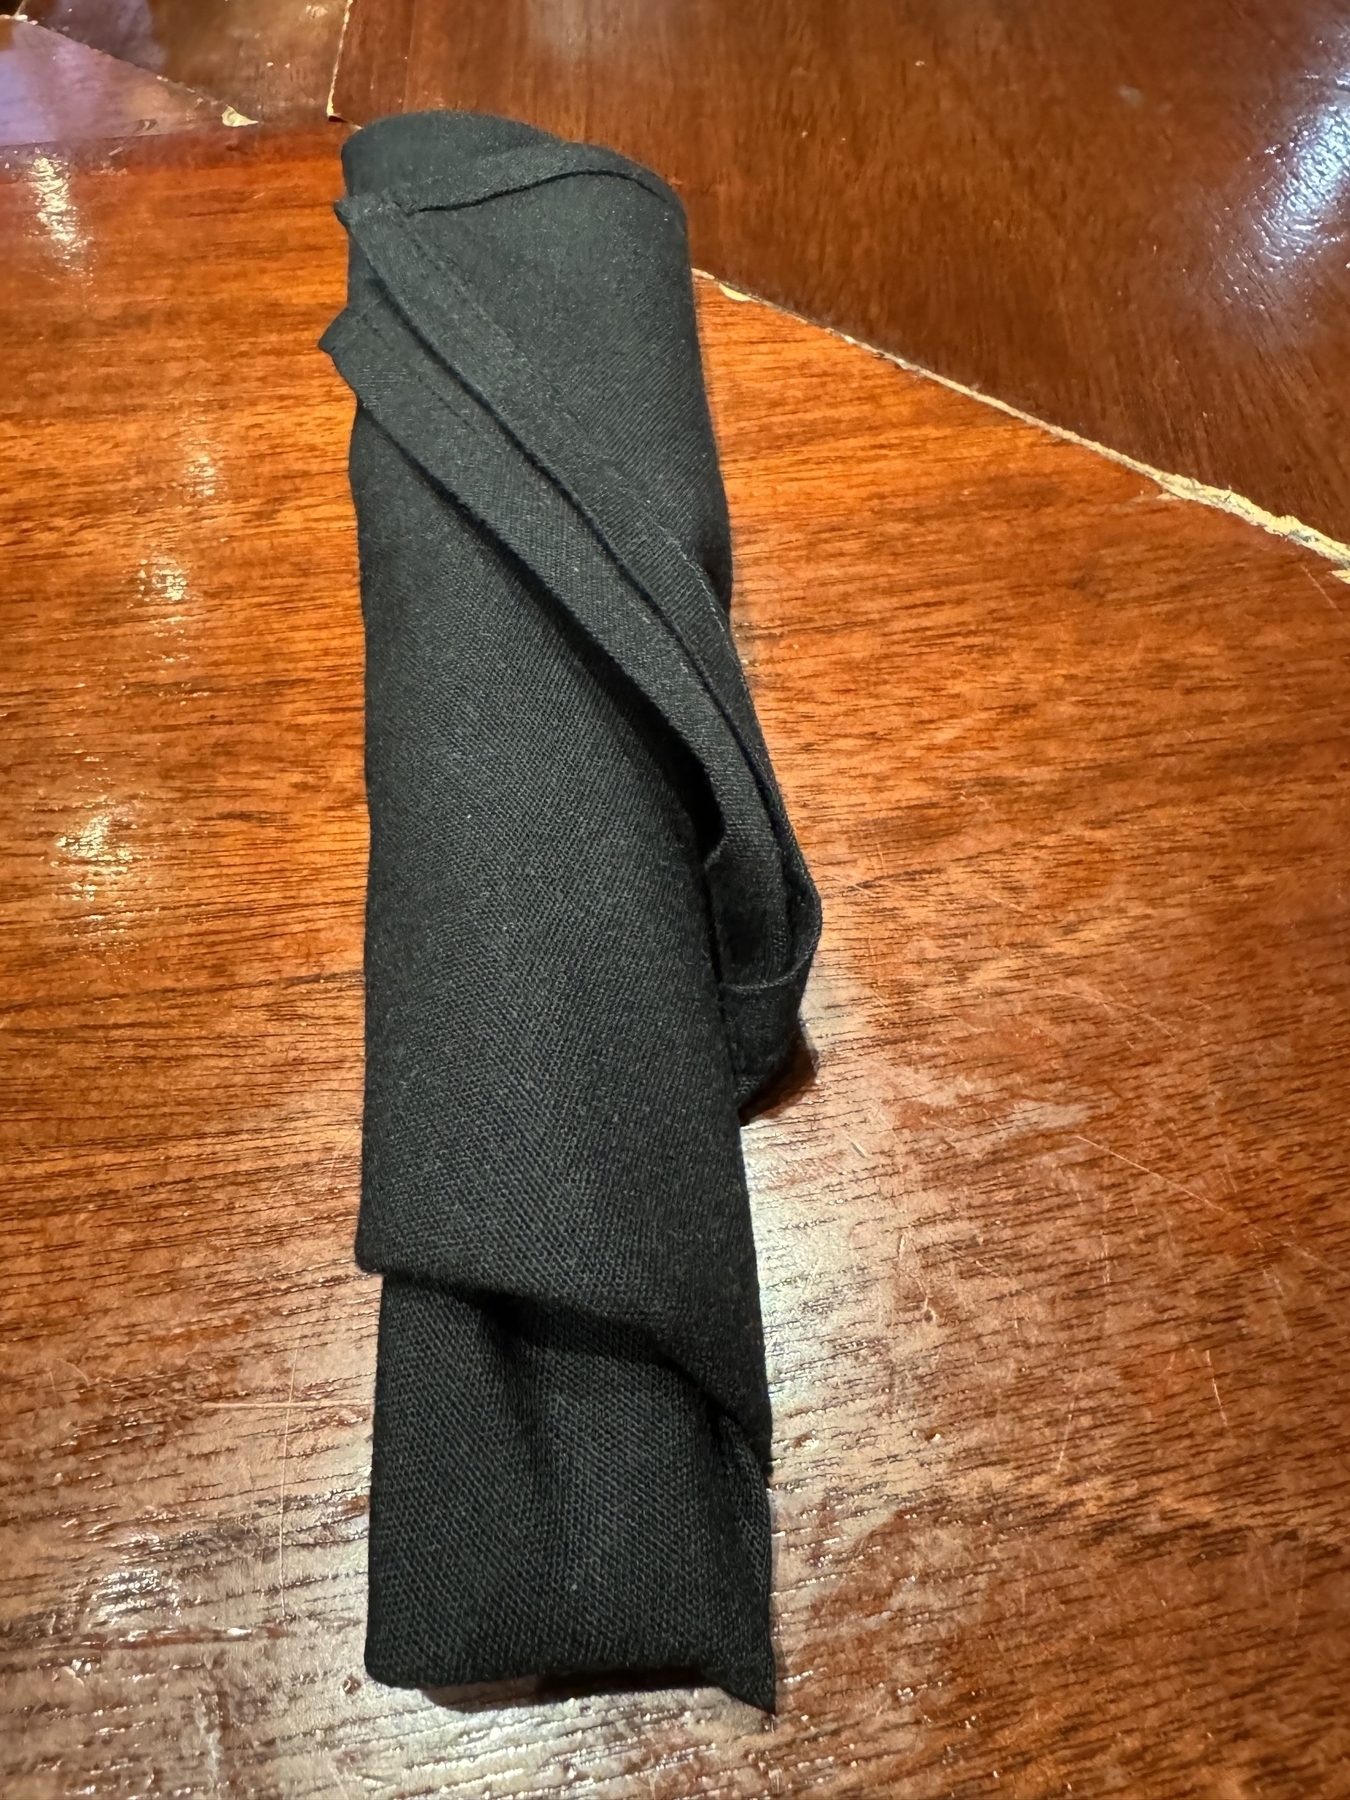 Restaurant utensils in a black napkin 